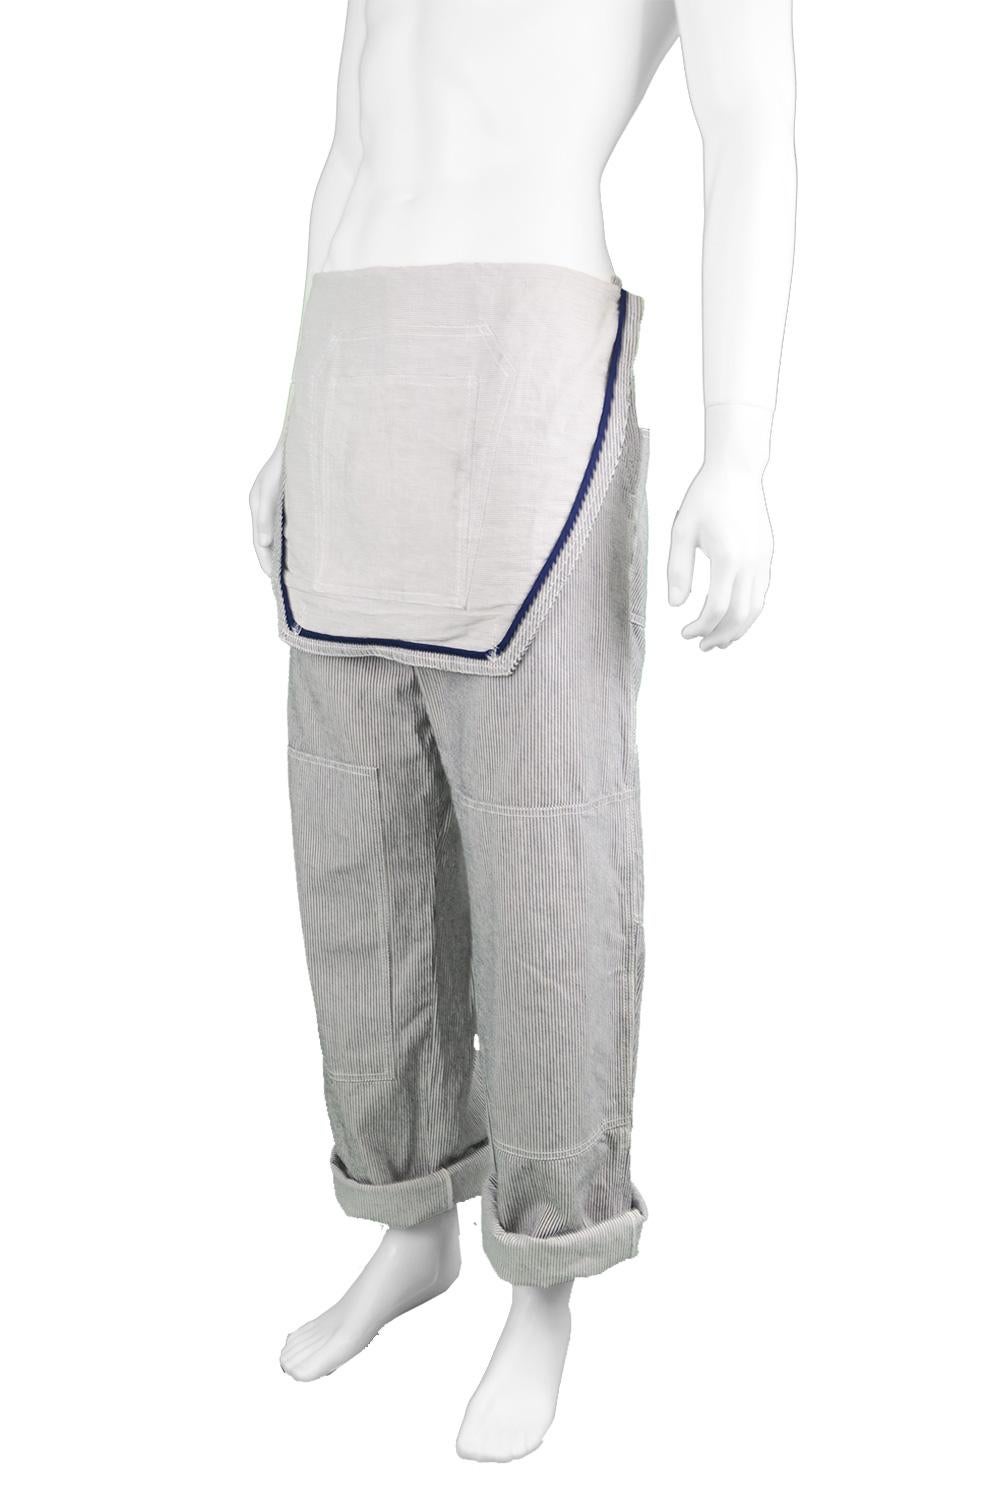 Alexander McQueen Men's Pinstripe Cotton Overall Pants with Bib Front 2